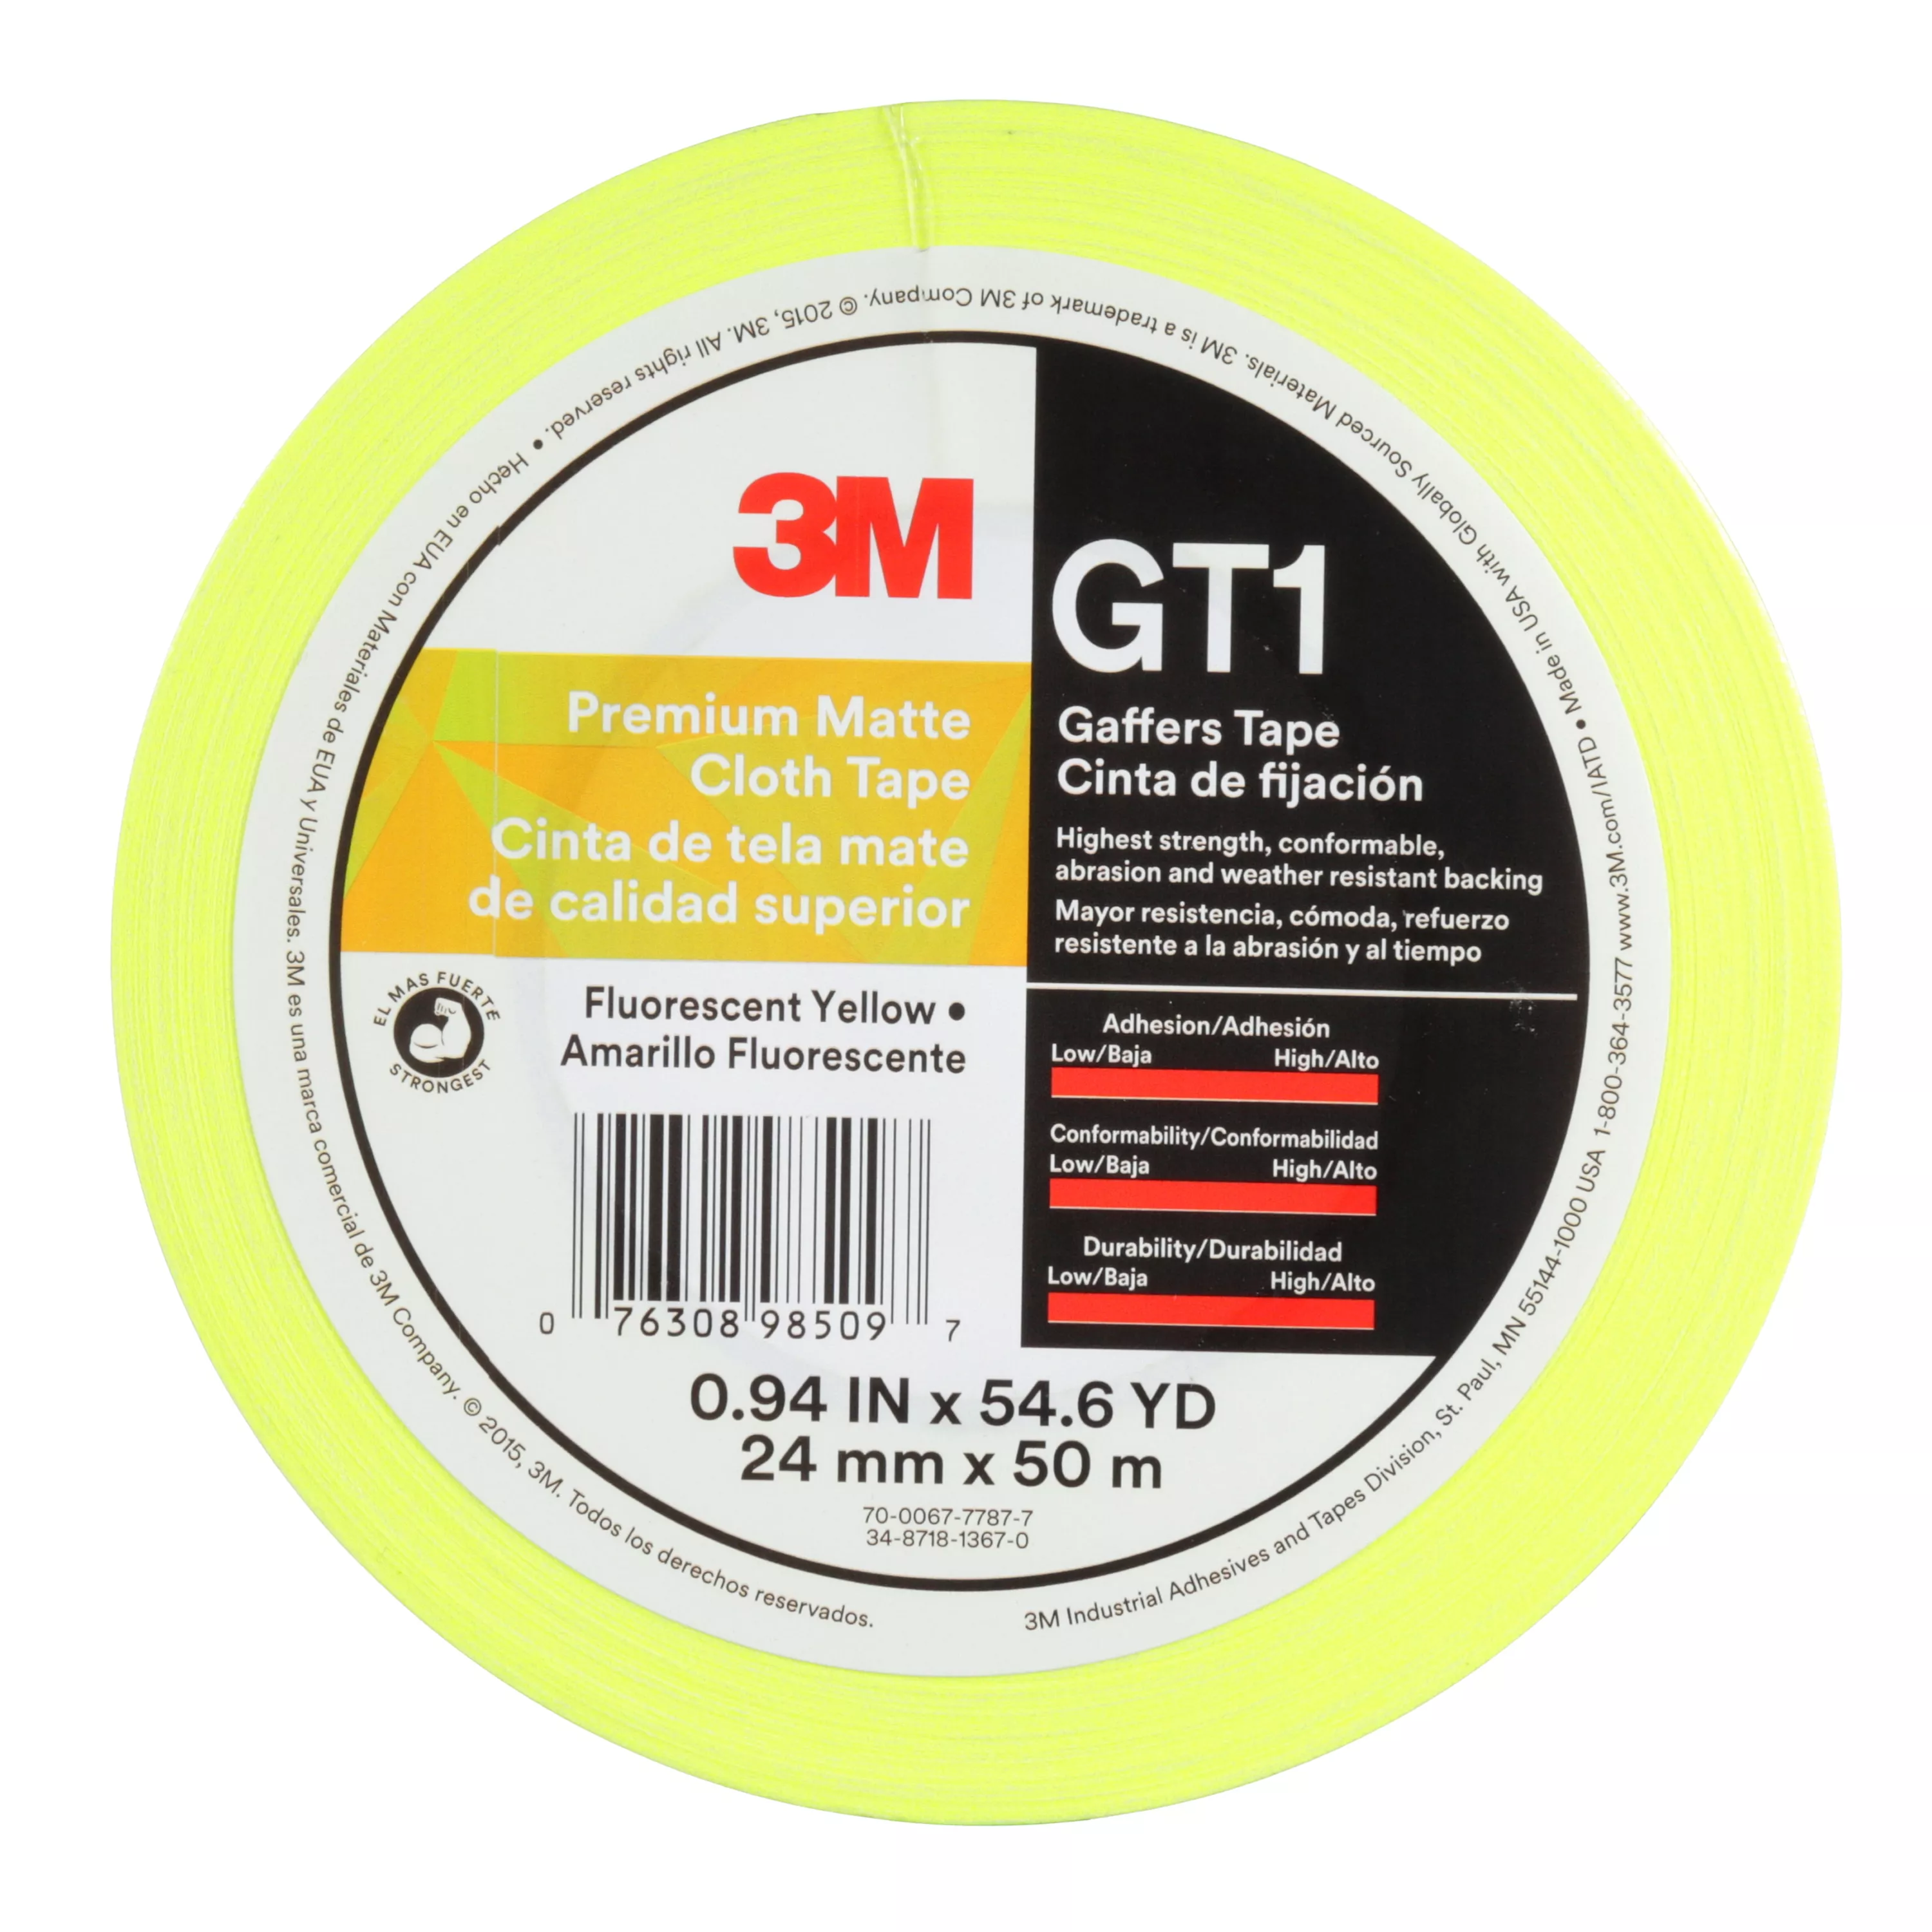 SKU 7010312515 | 3M™ Premium Matte Cloth (Gaffers) Tape GT1